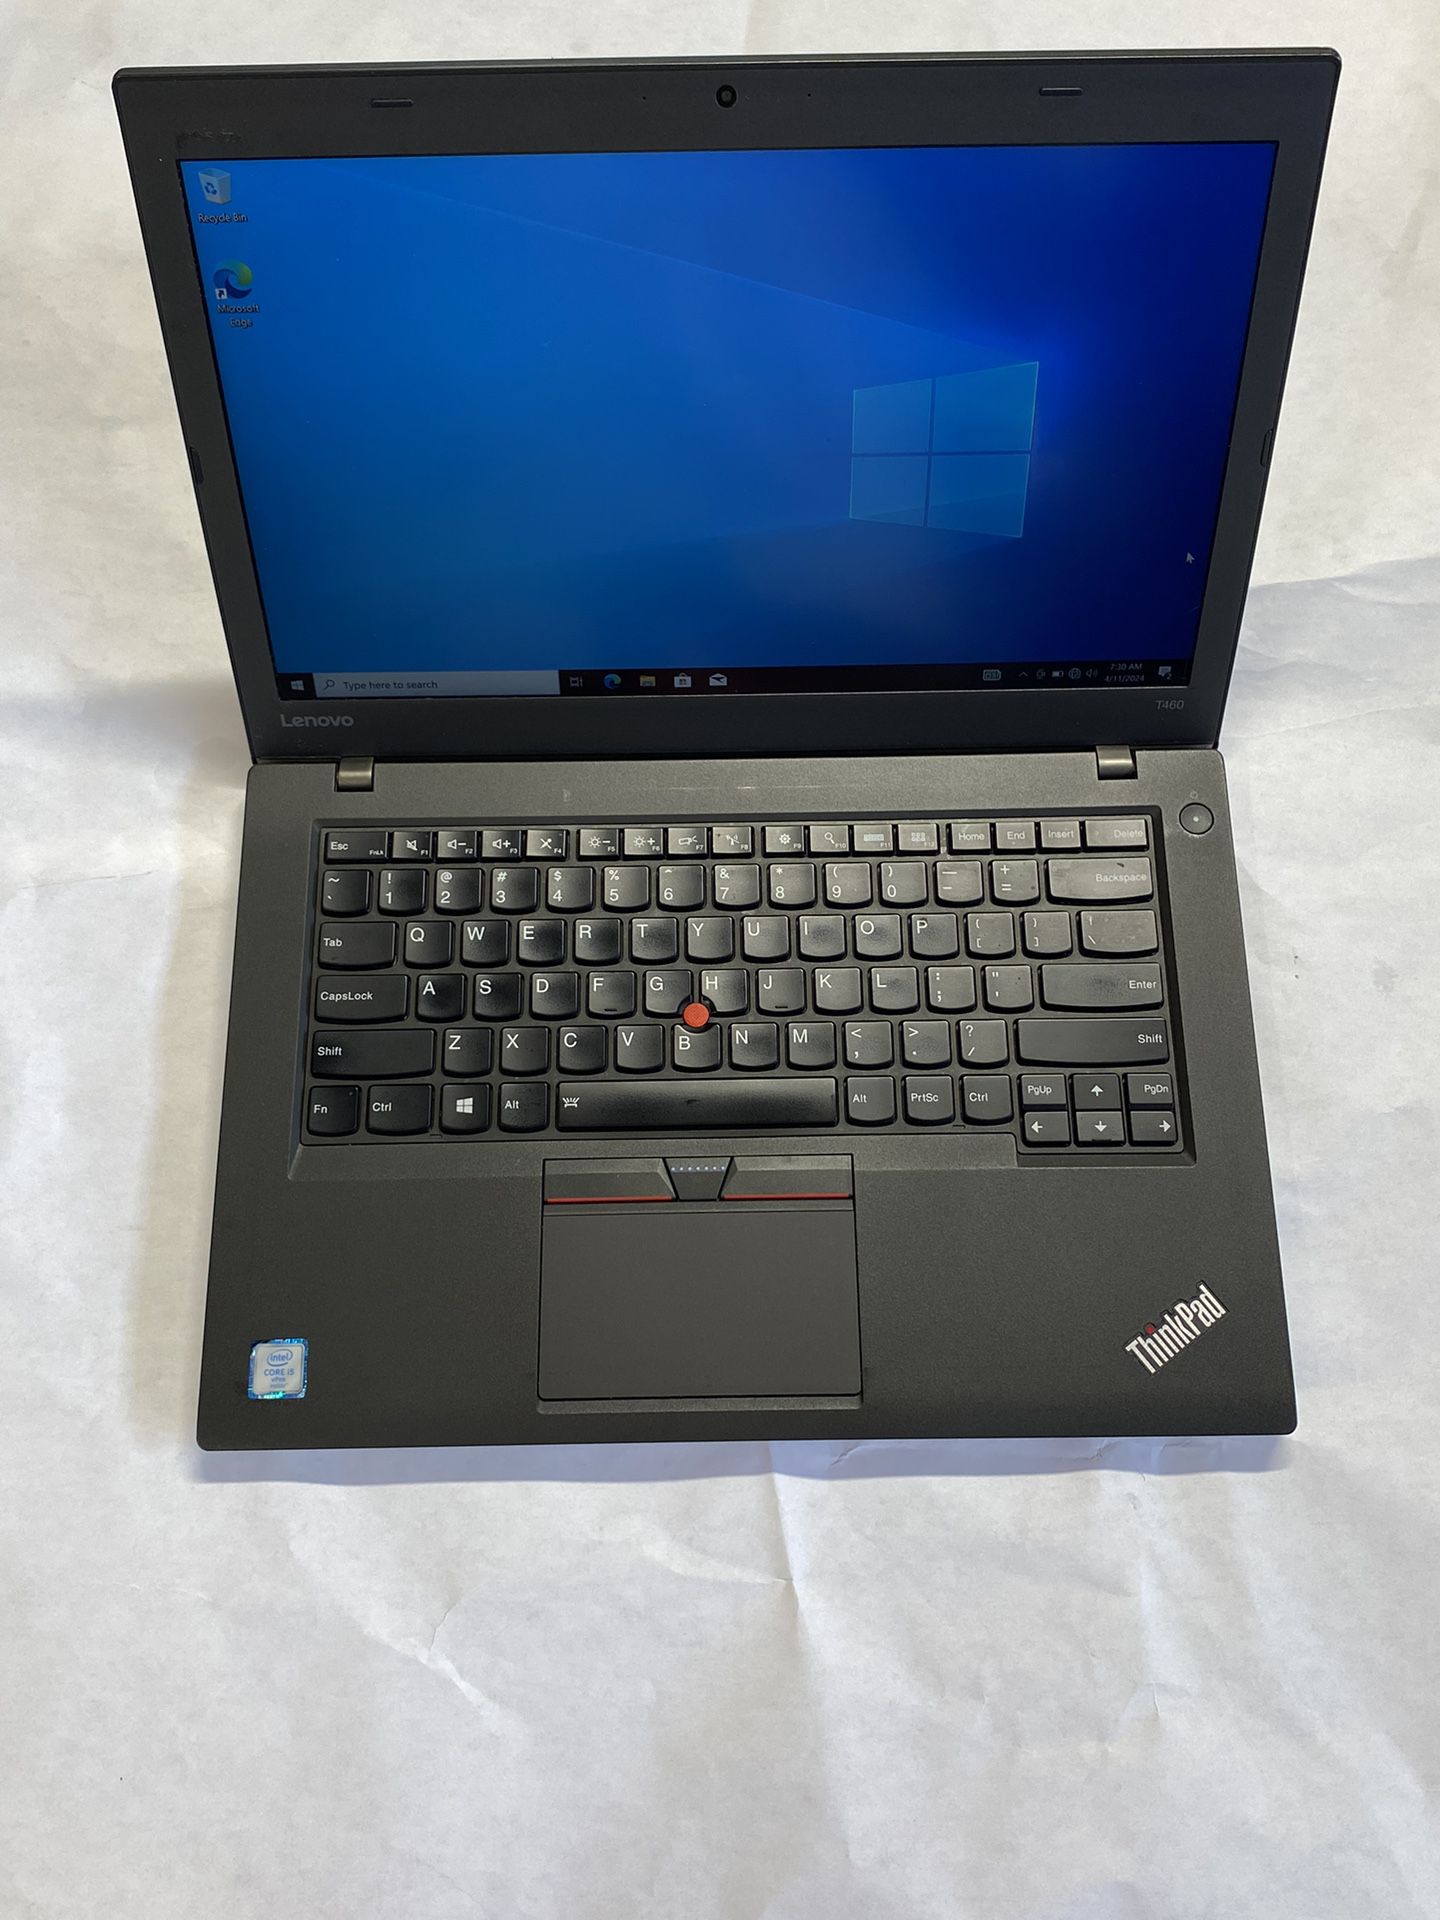 Laptop Lenovo T460. $89